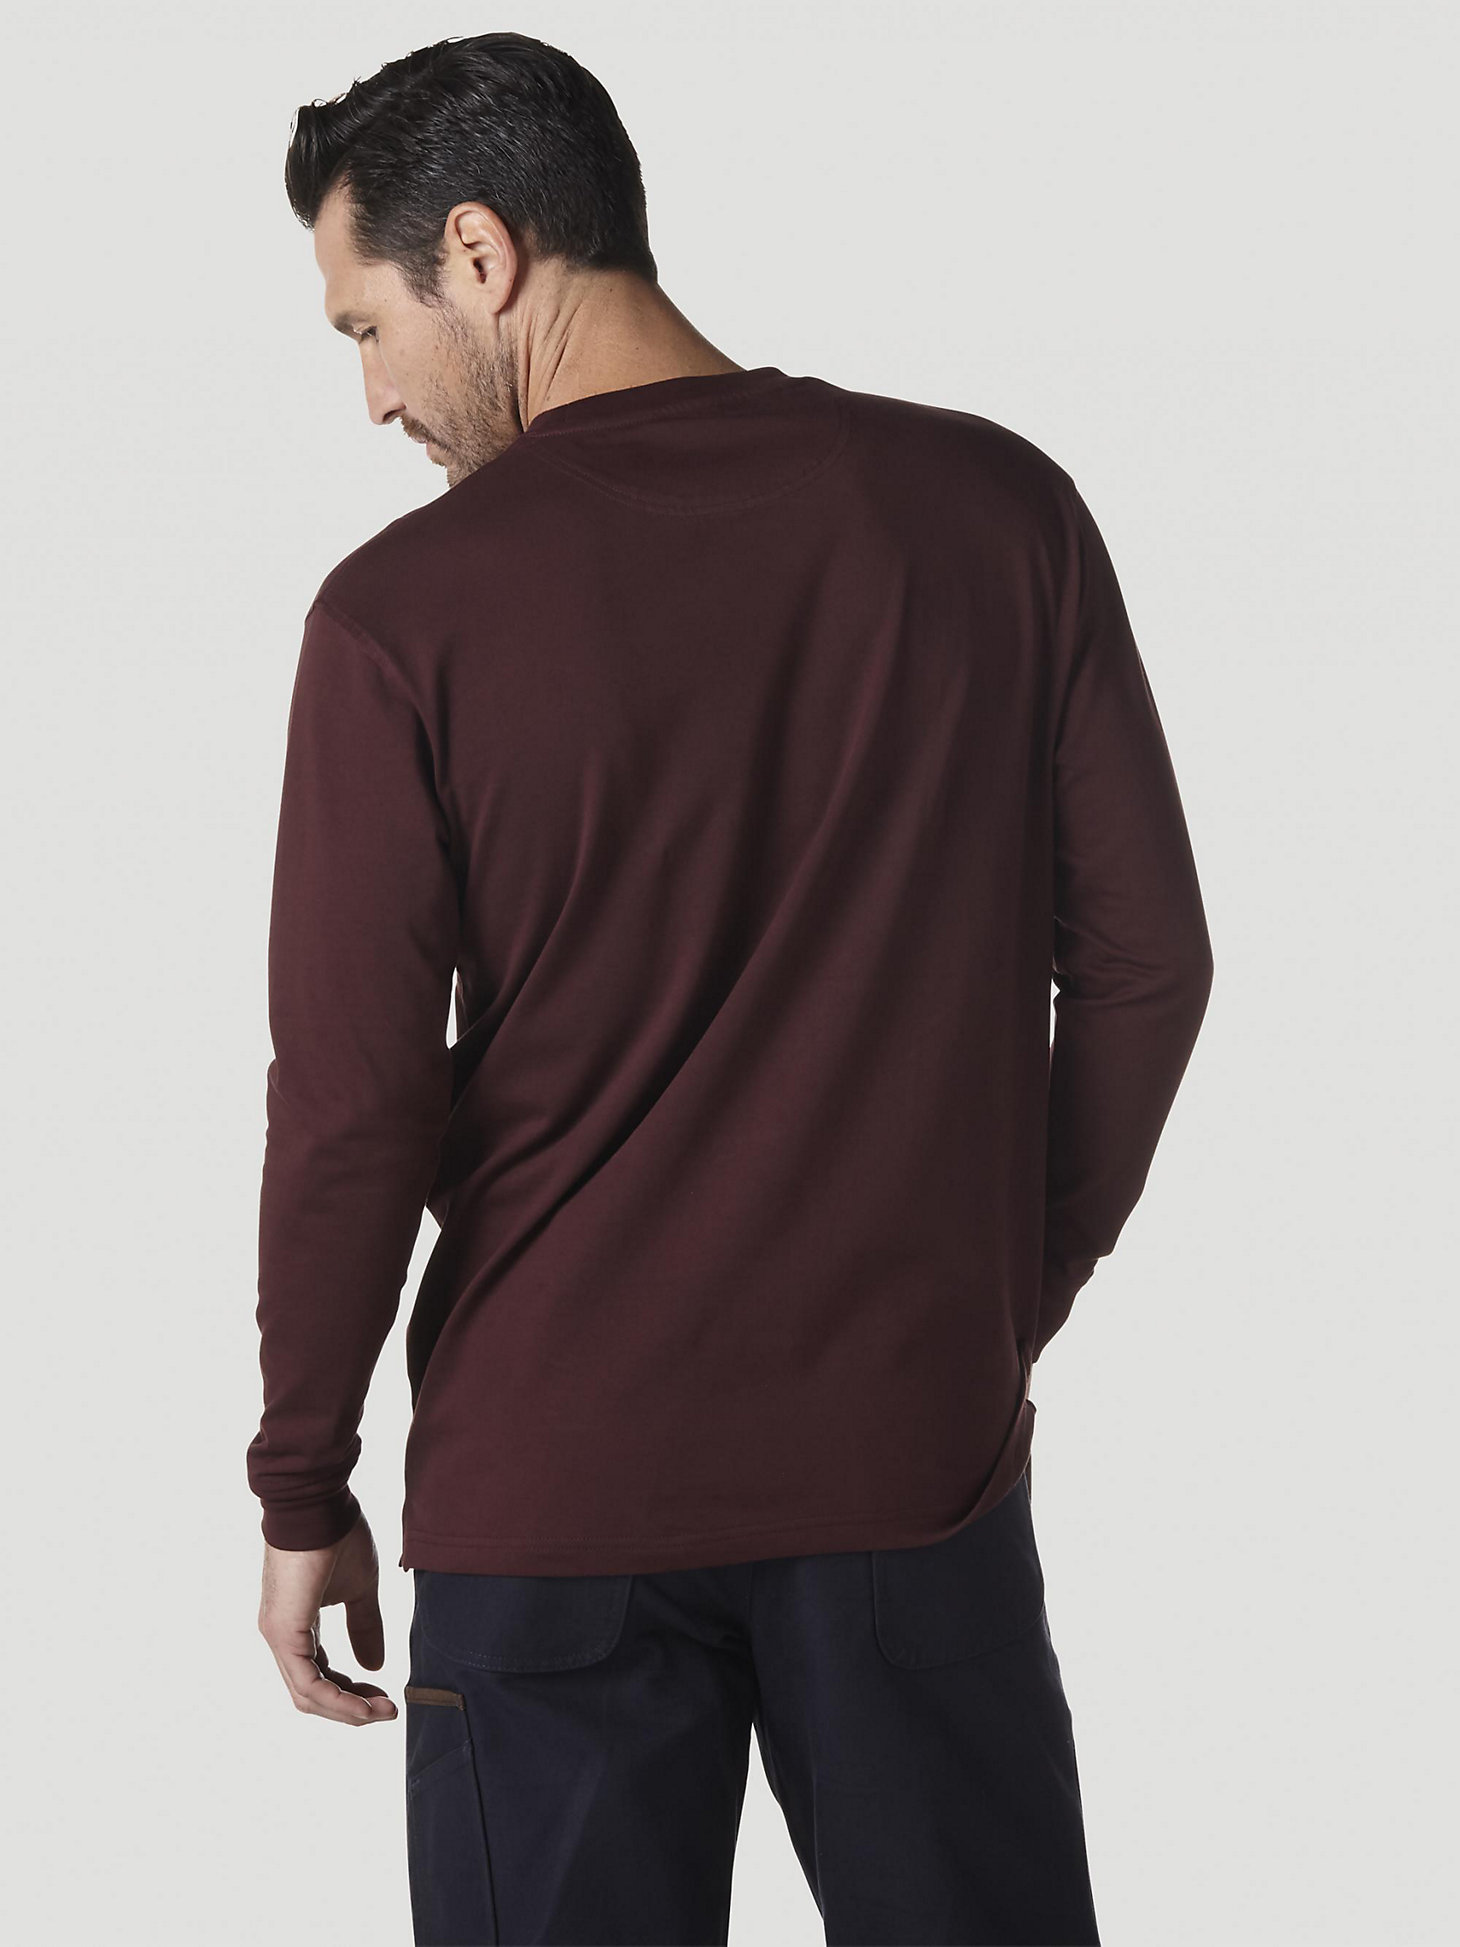 Wrangler® RIGGS Workwear® Long Sleeve Pocket T-Shirt in Burgundy alternative view 1